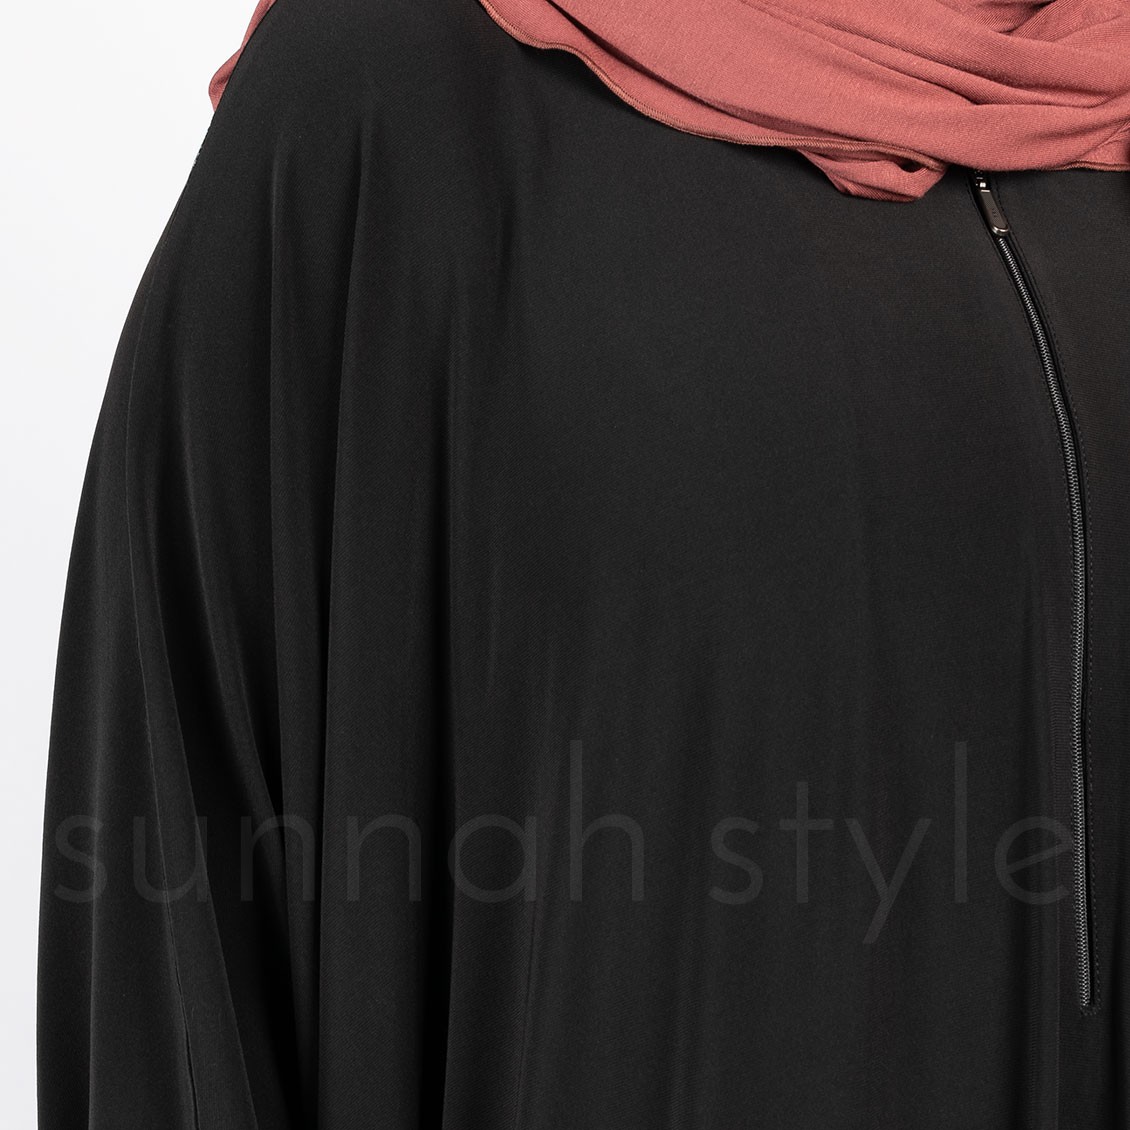 Jersey Bisht Abaya (Black)